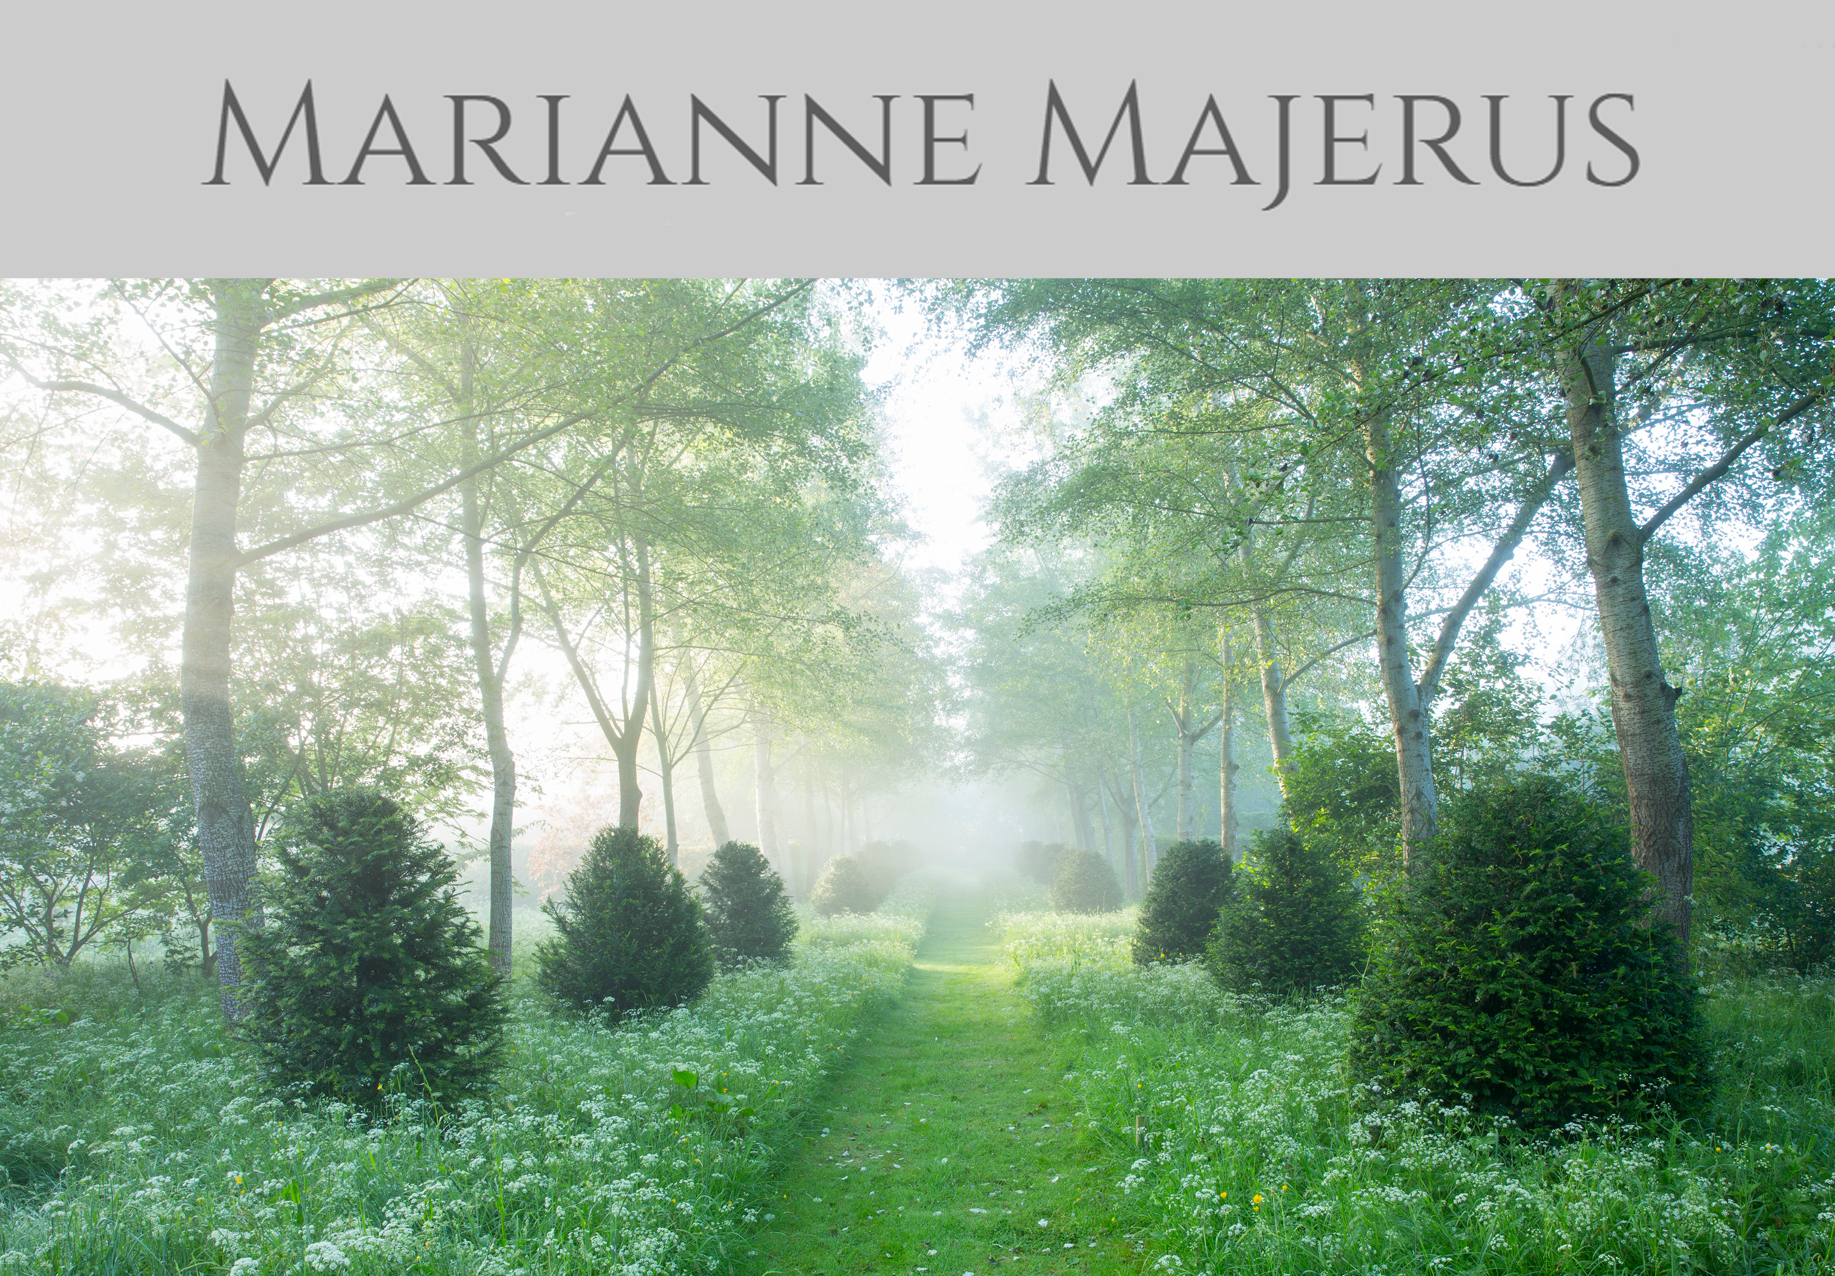 Marianne Majerus